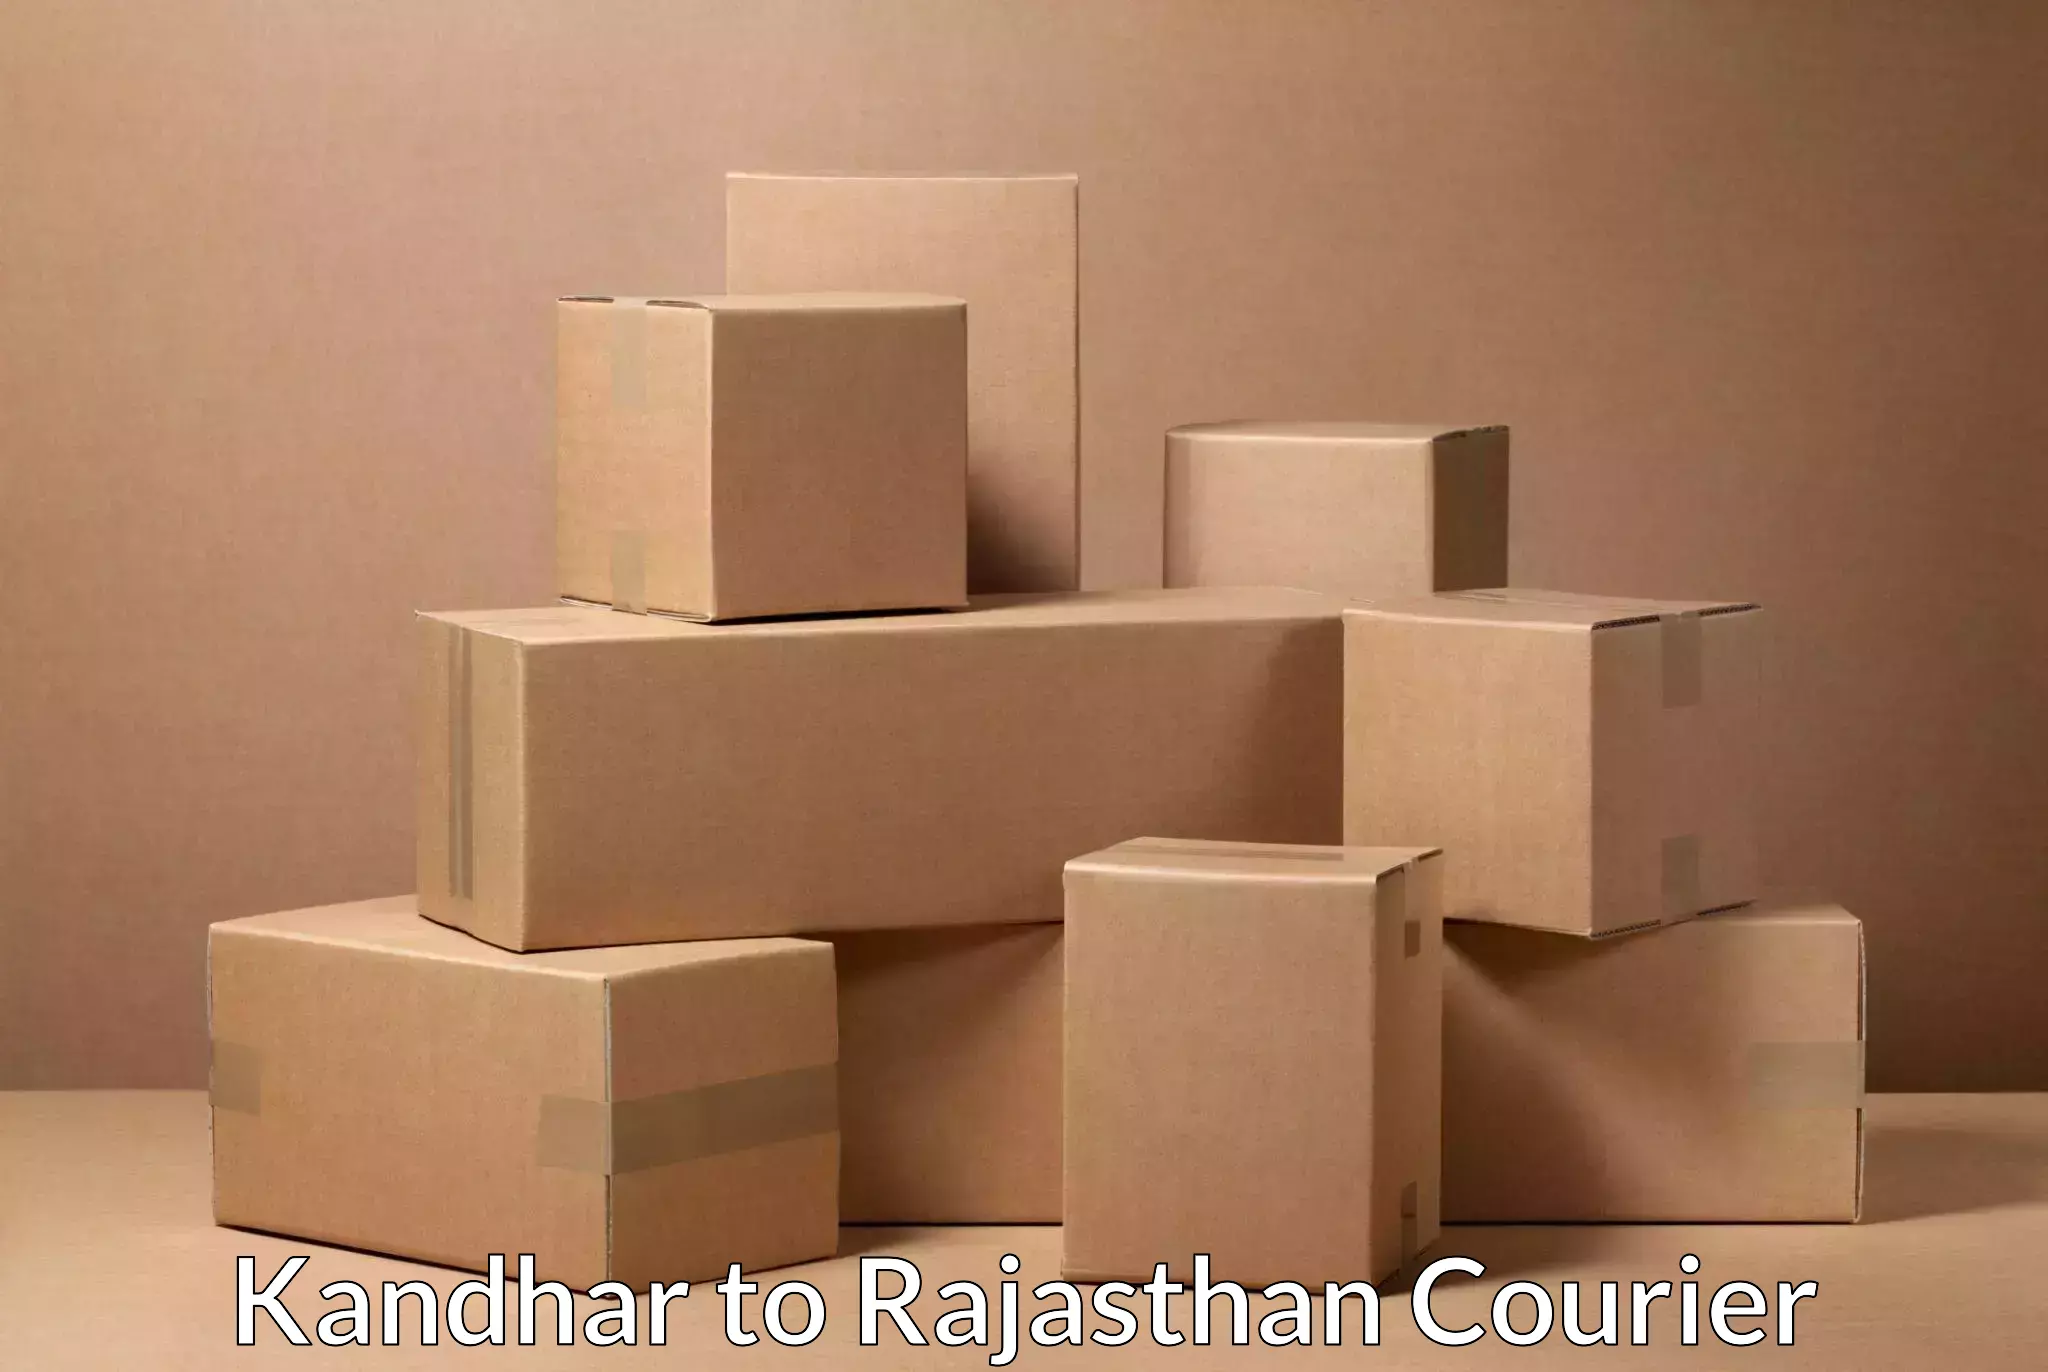 Courier service comparison Kandhar to Ghator